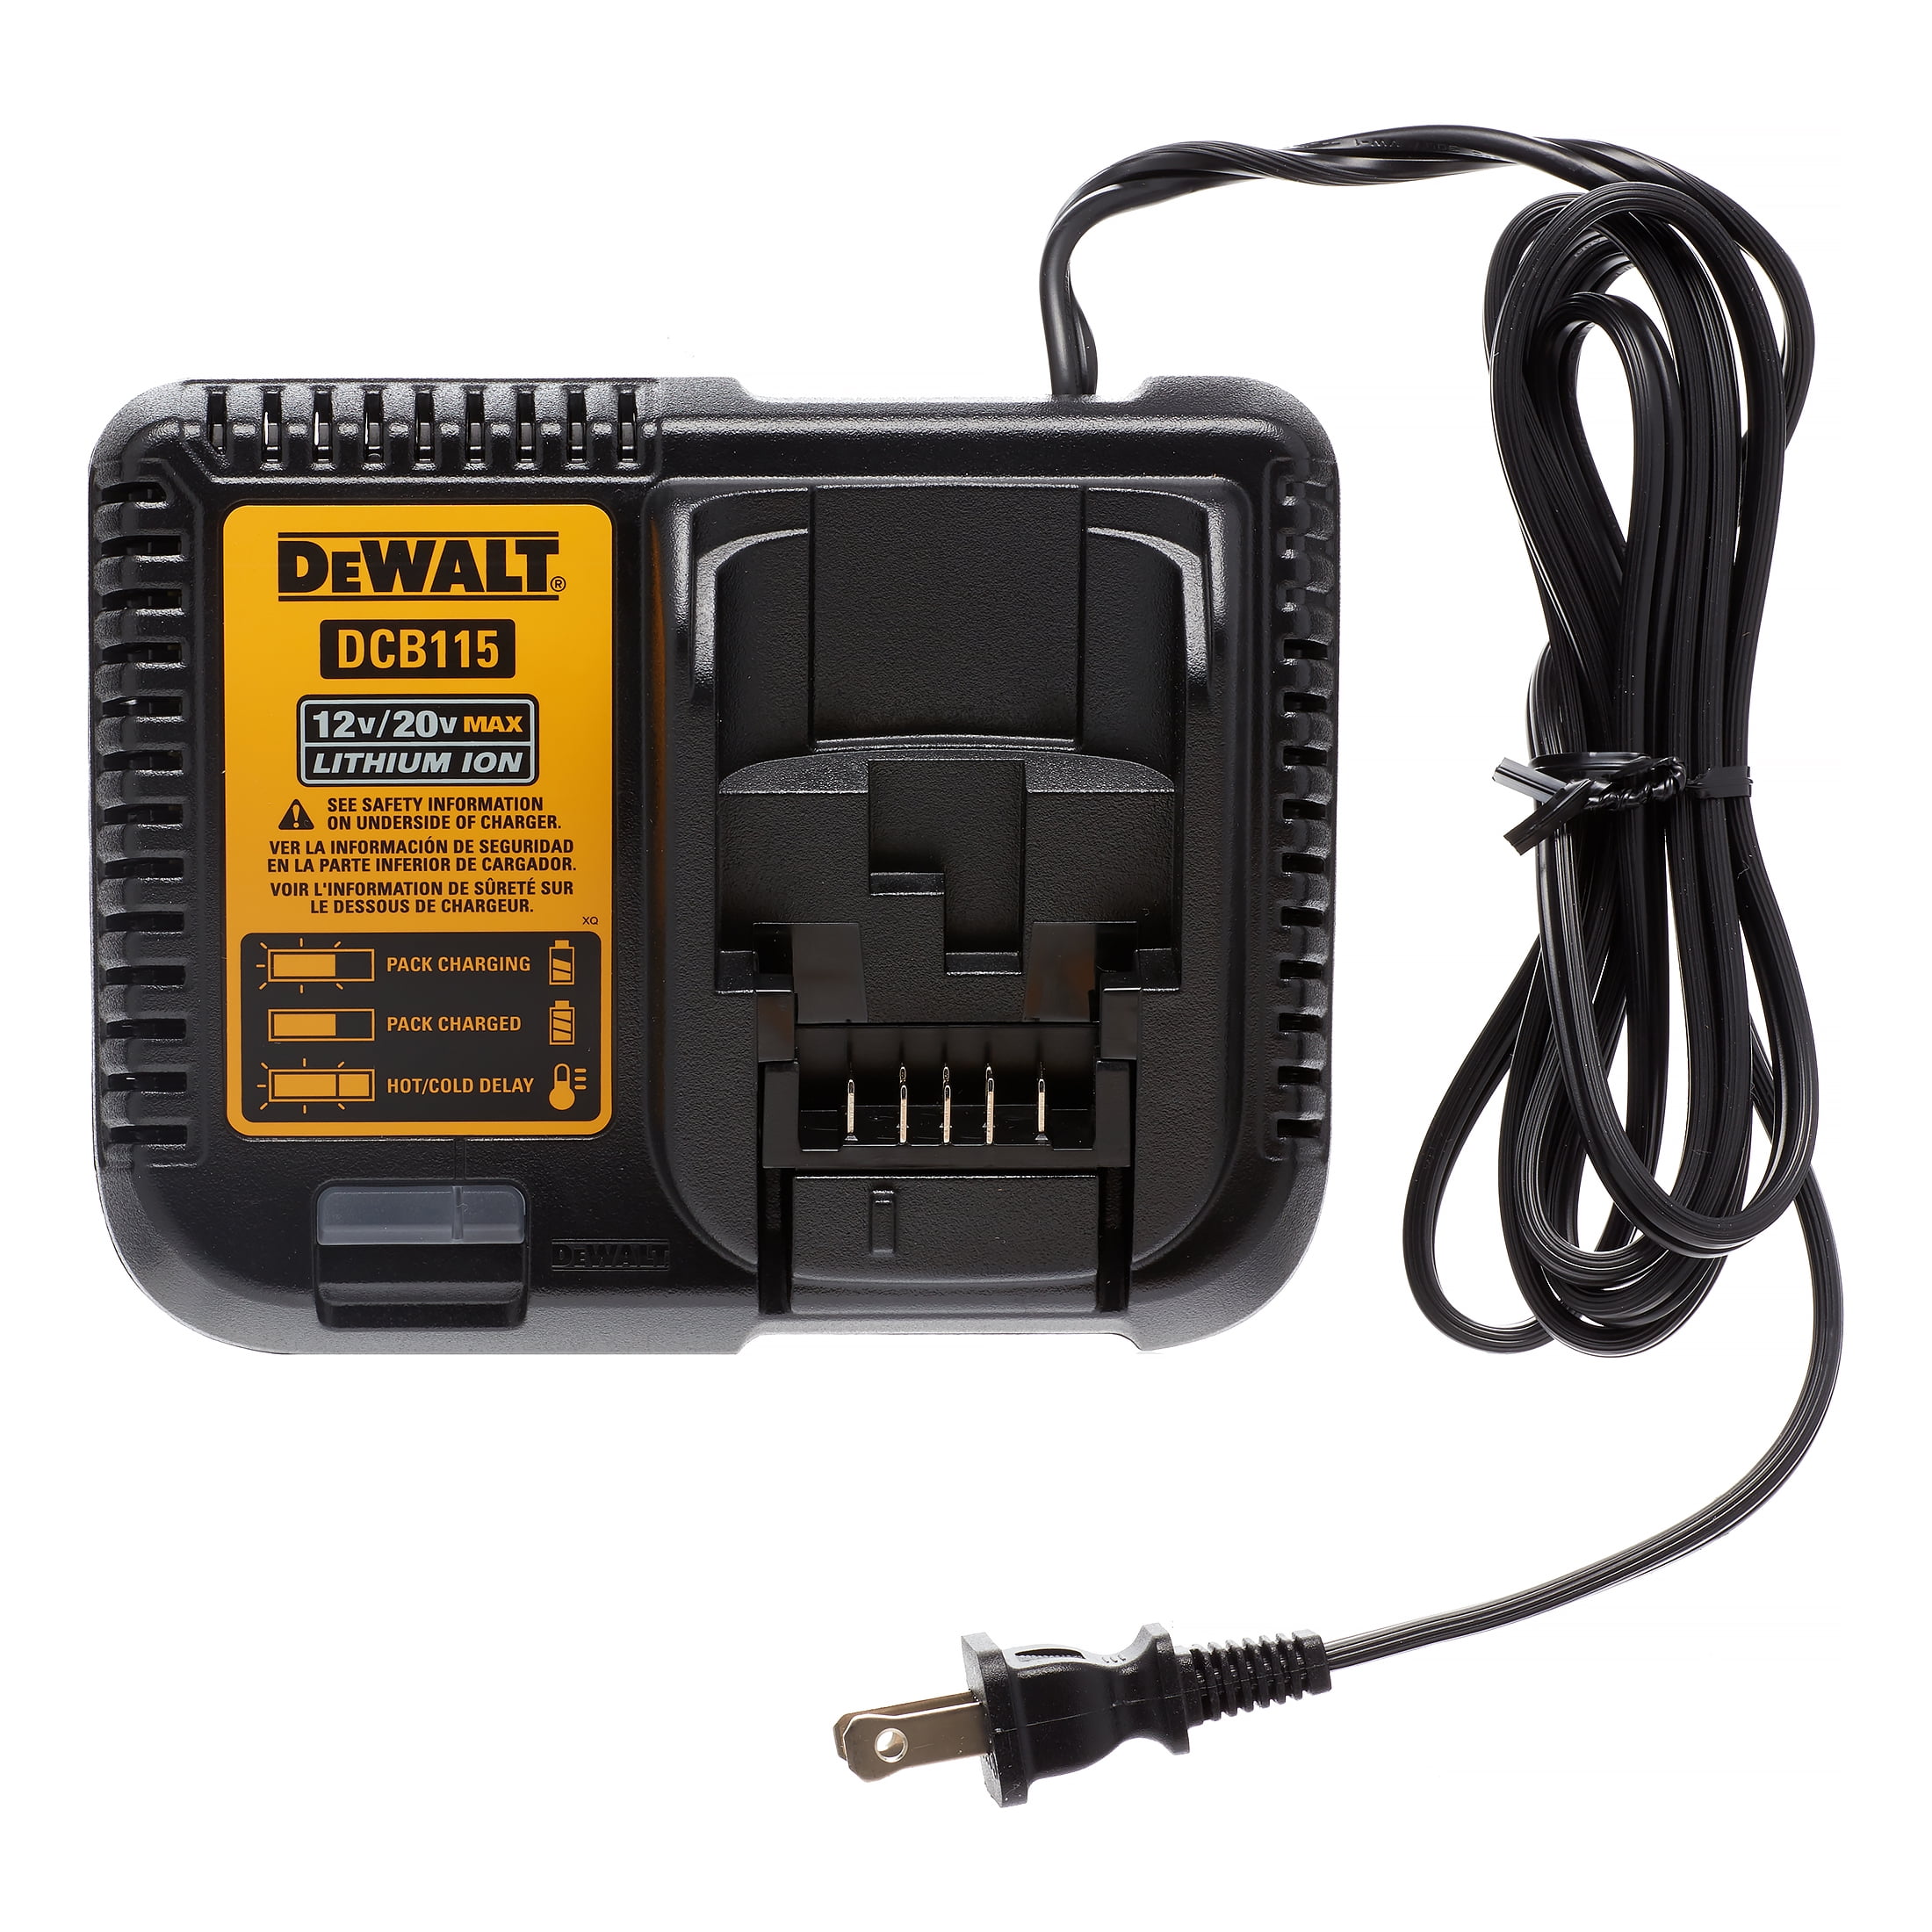 Dewalt-Black & Decker DWDCA2203C 18V-20V Battery Adaptor with Two